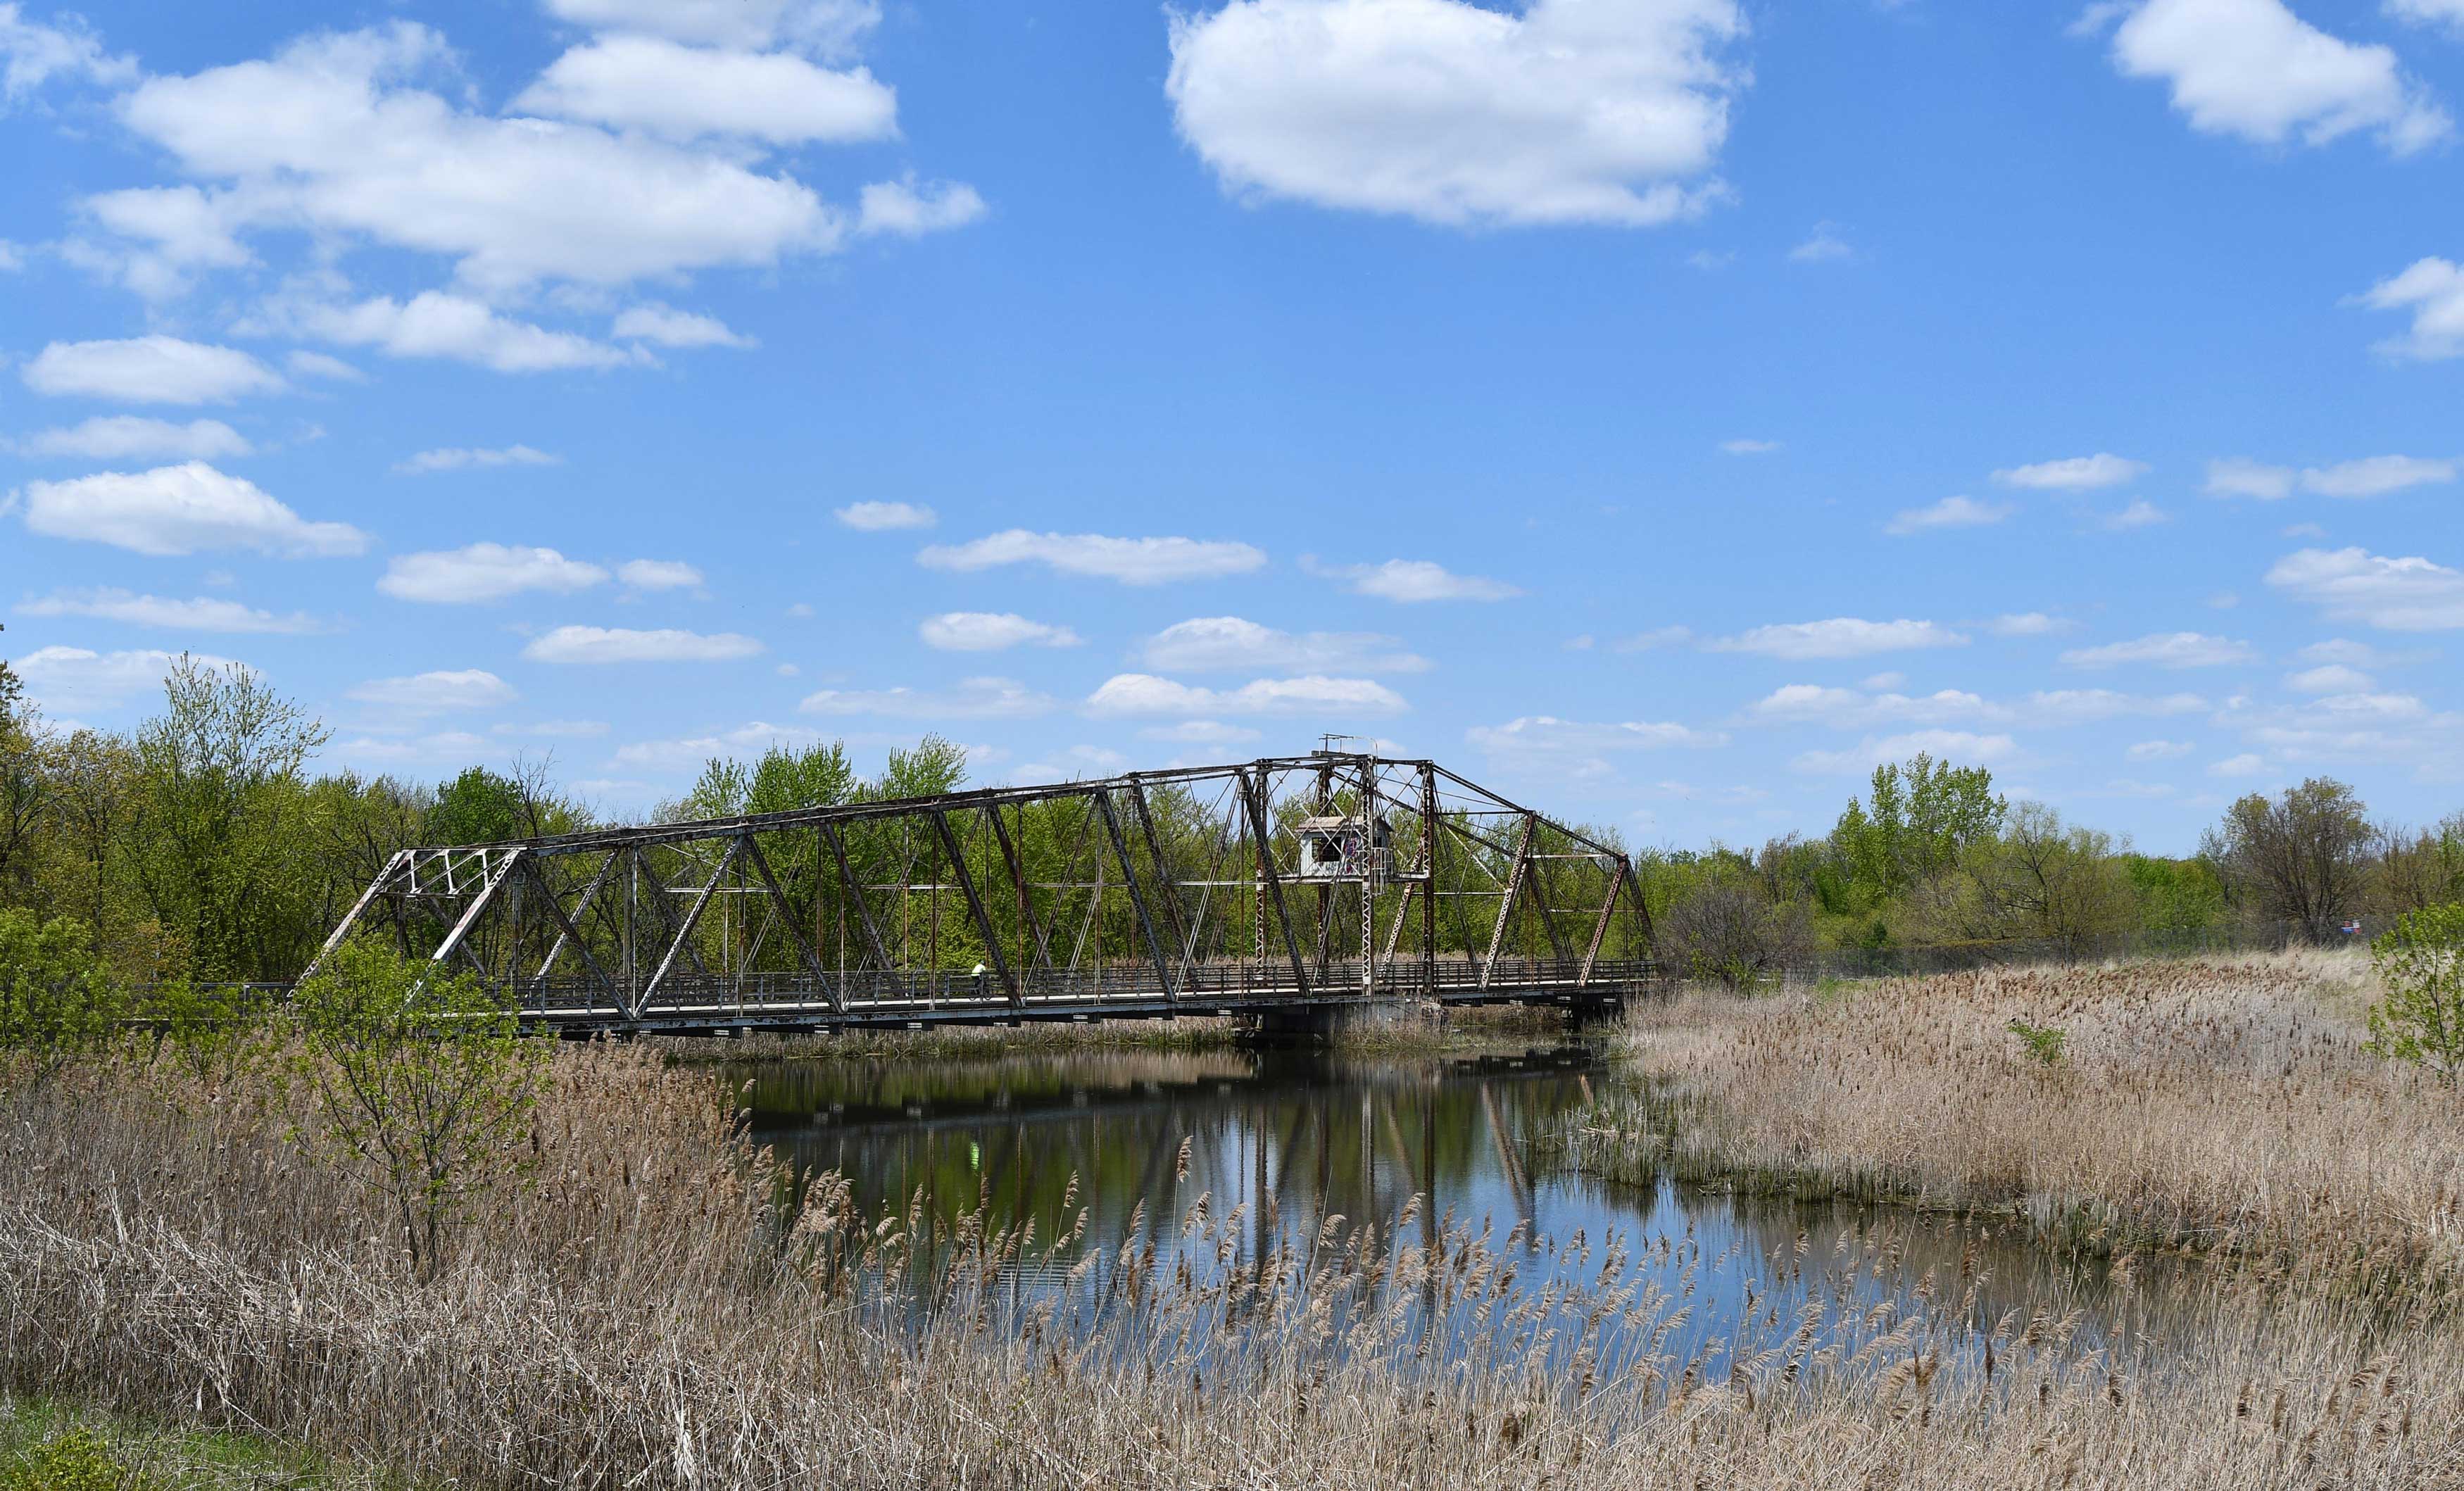 A scenic view of the swing bridge along Centennial Trail.